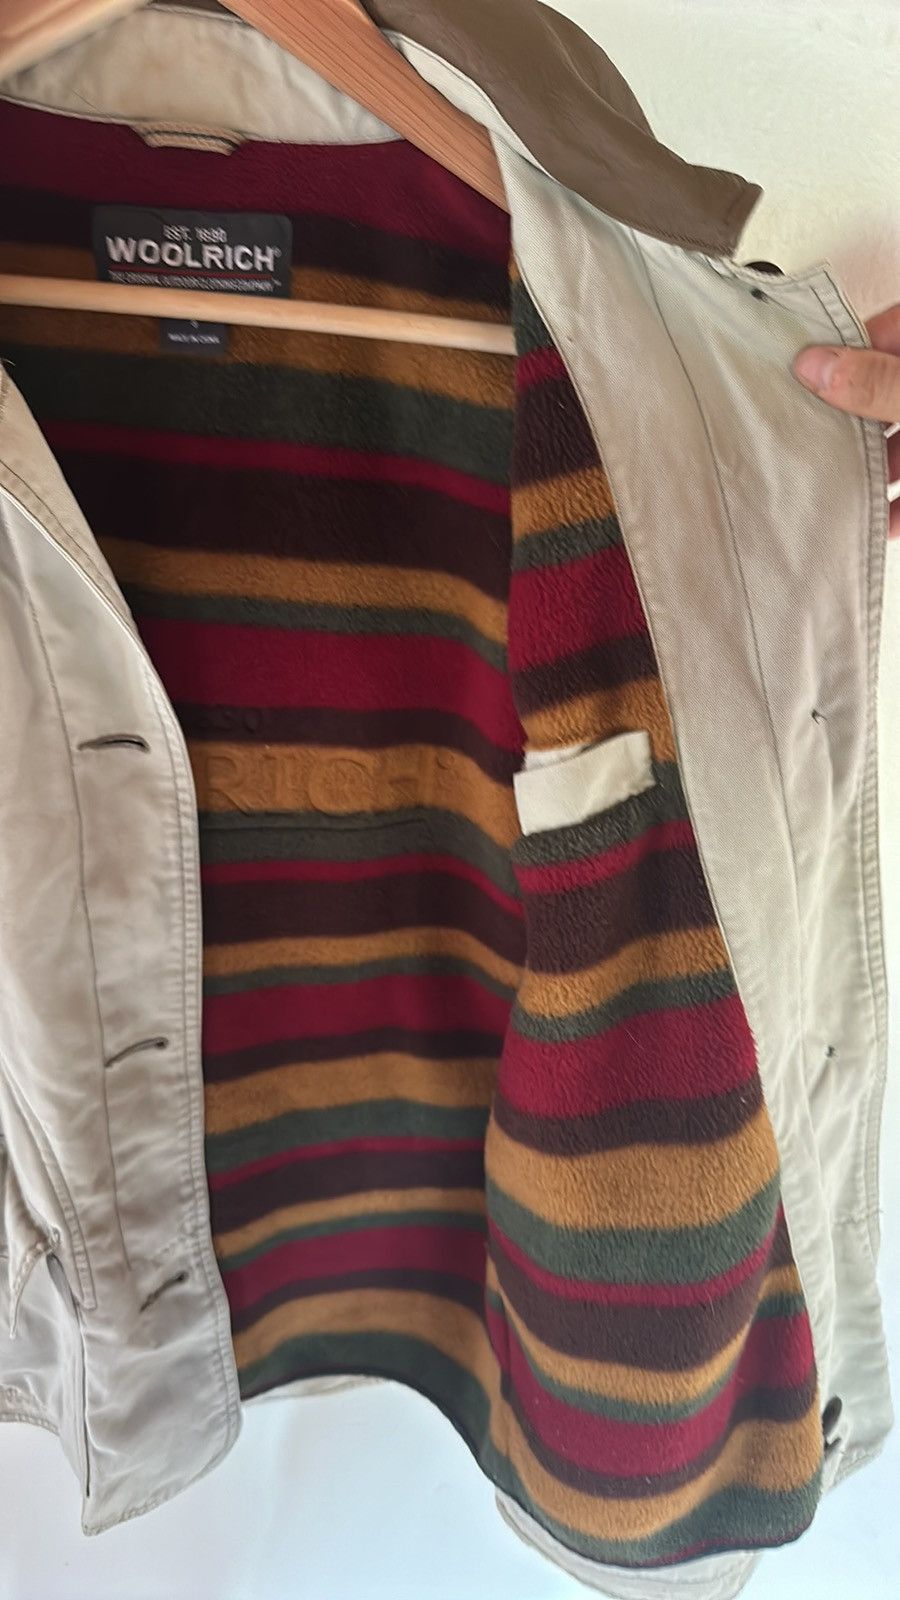 Woolrich Woolen Mills Woolrich Blanket Lined Chore Jacket Size S / US 4 / IT 40 - 3 Preview